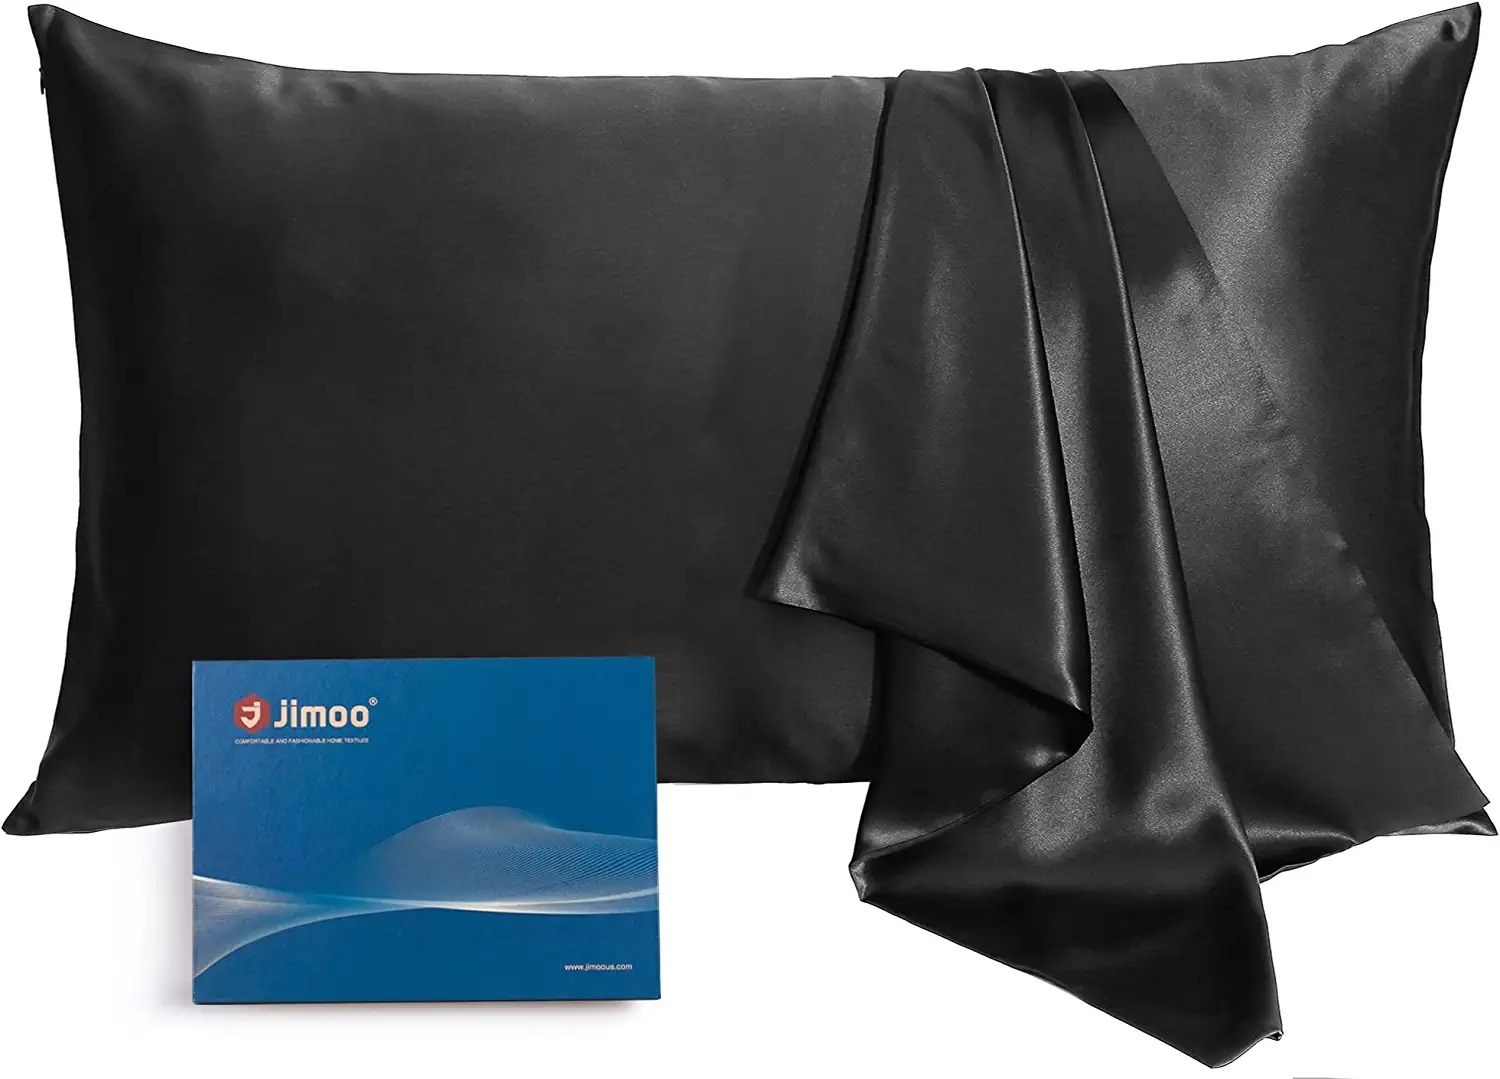 A pillow with a black silk pillowcase